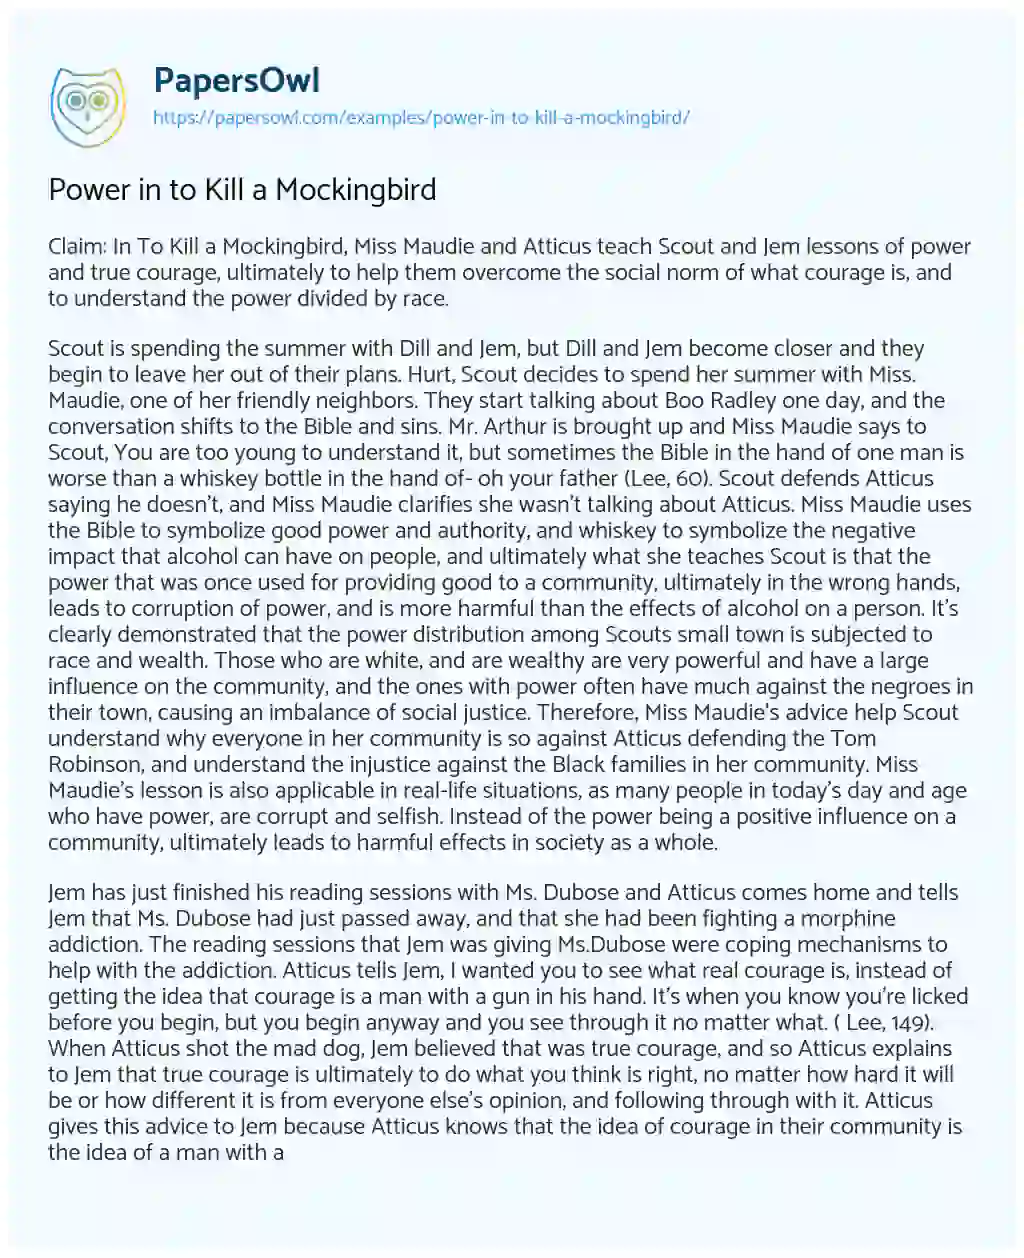 Essay on Power in to Kill a Mockingbird